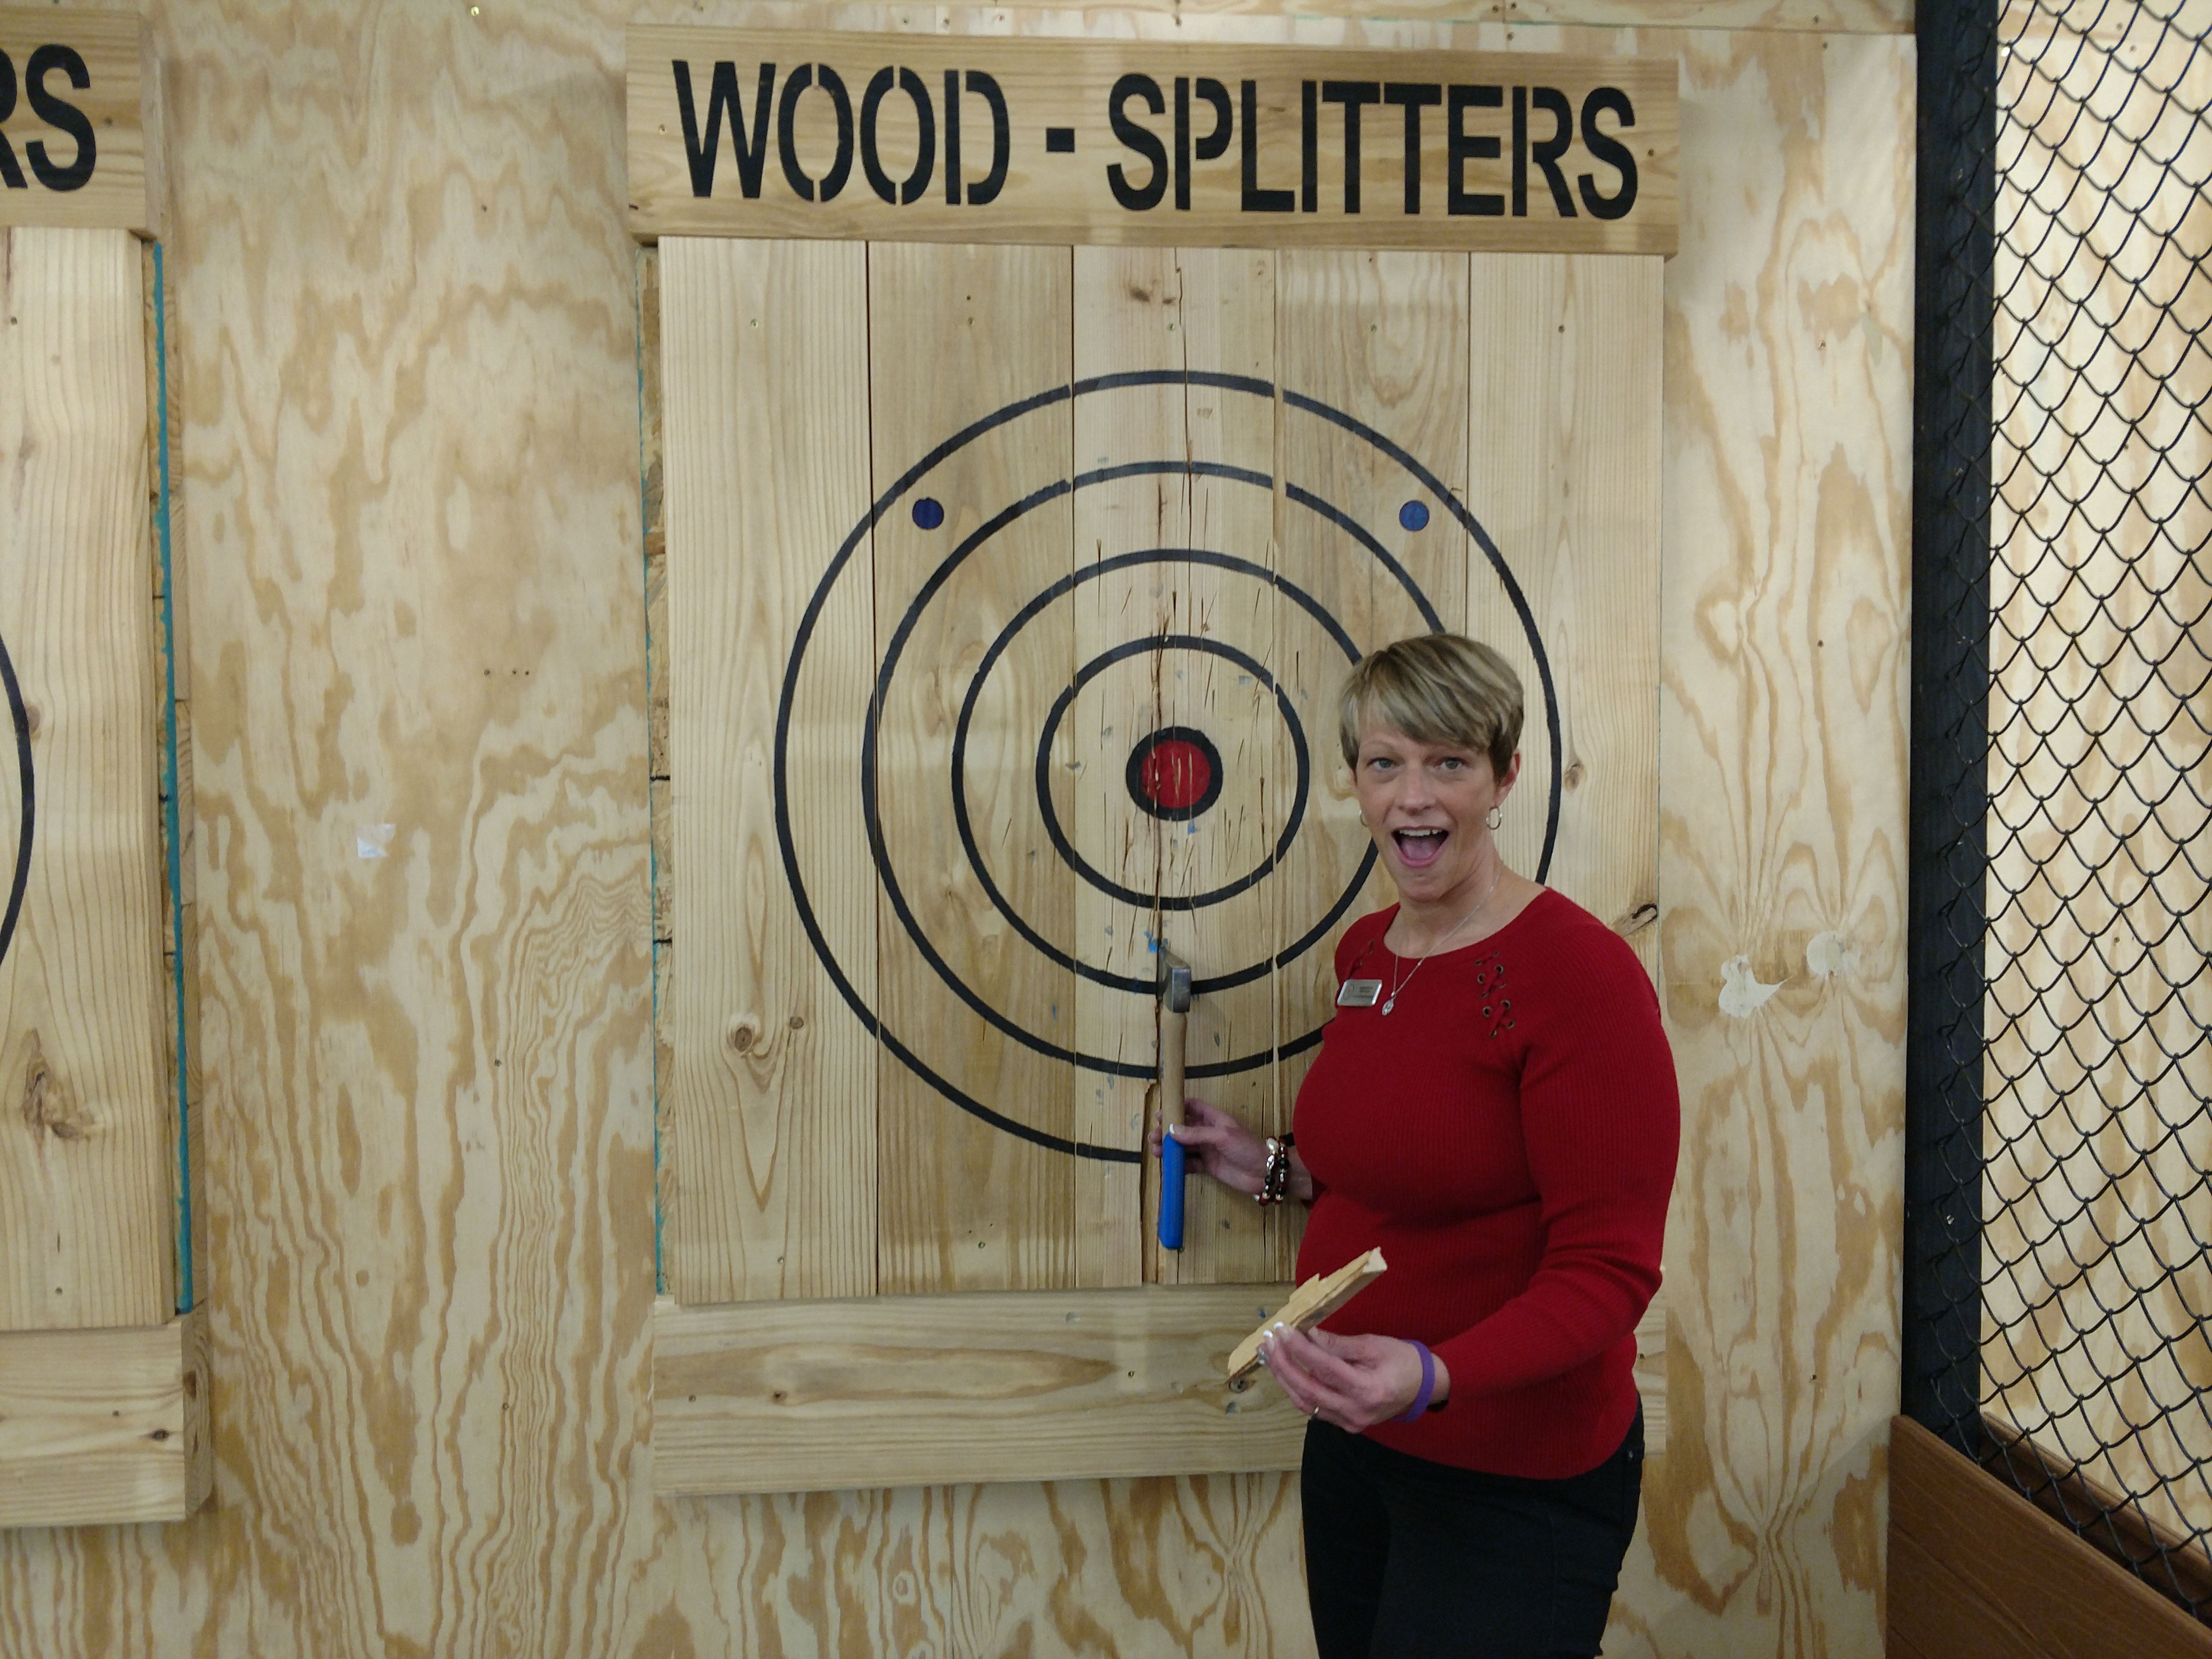 Wood-Splitters Axe Throwing Gallery Image 56